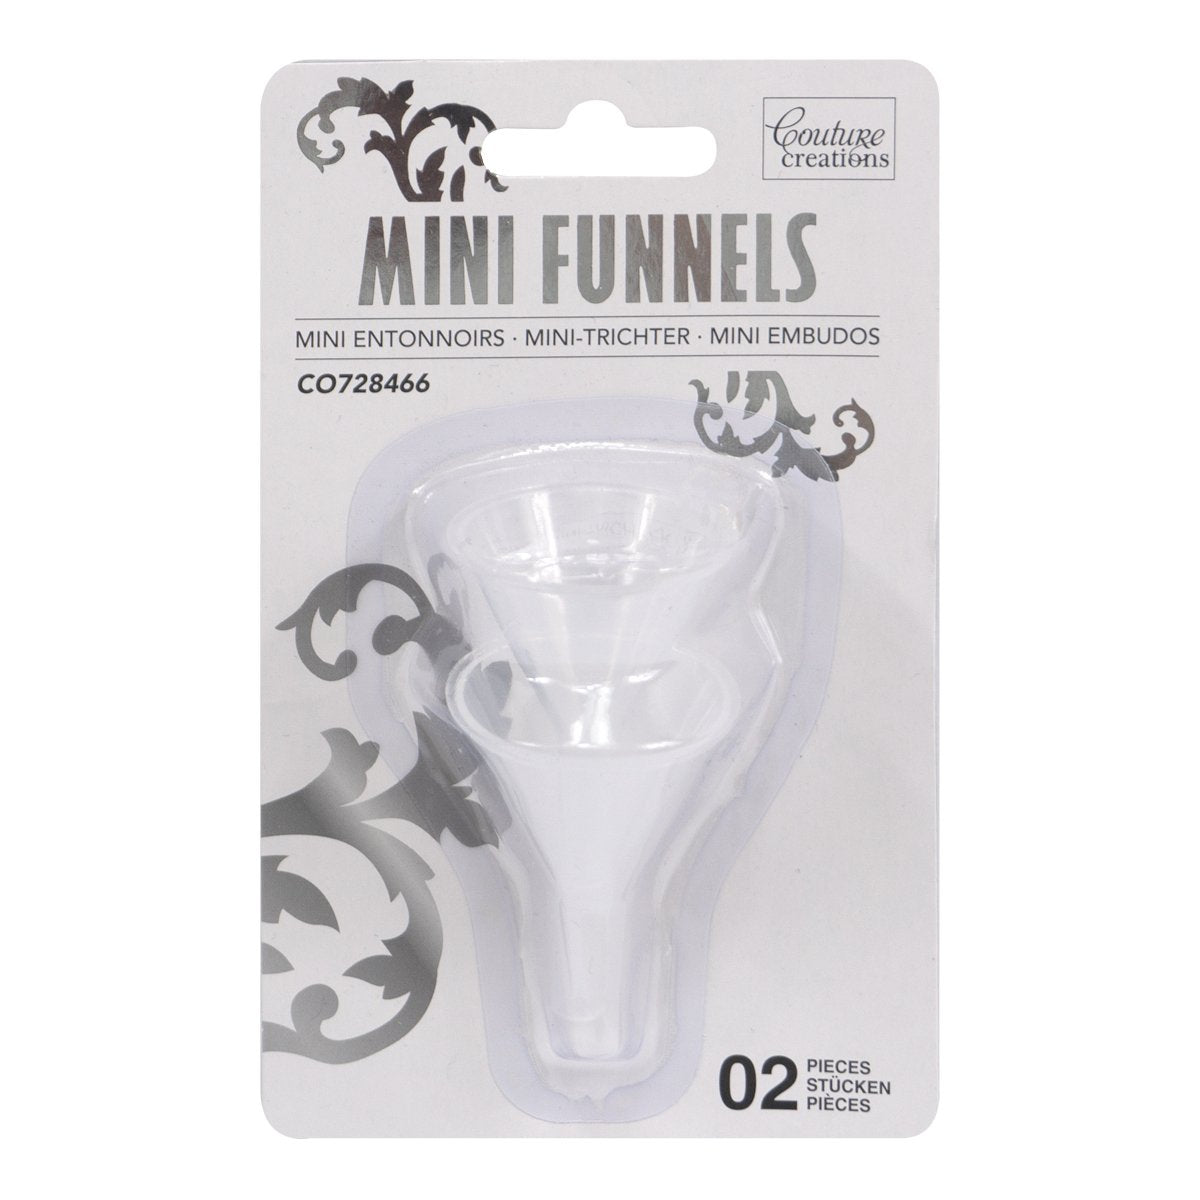 Mini Funnels